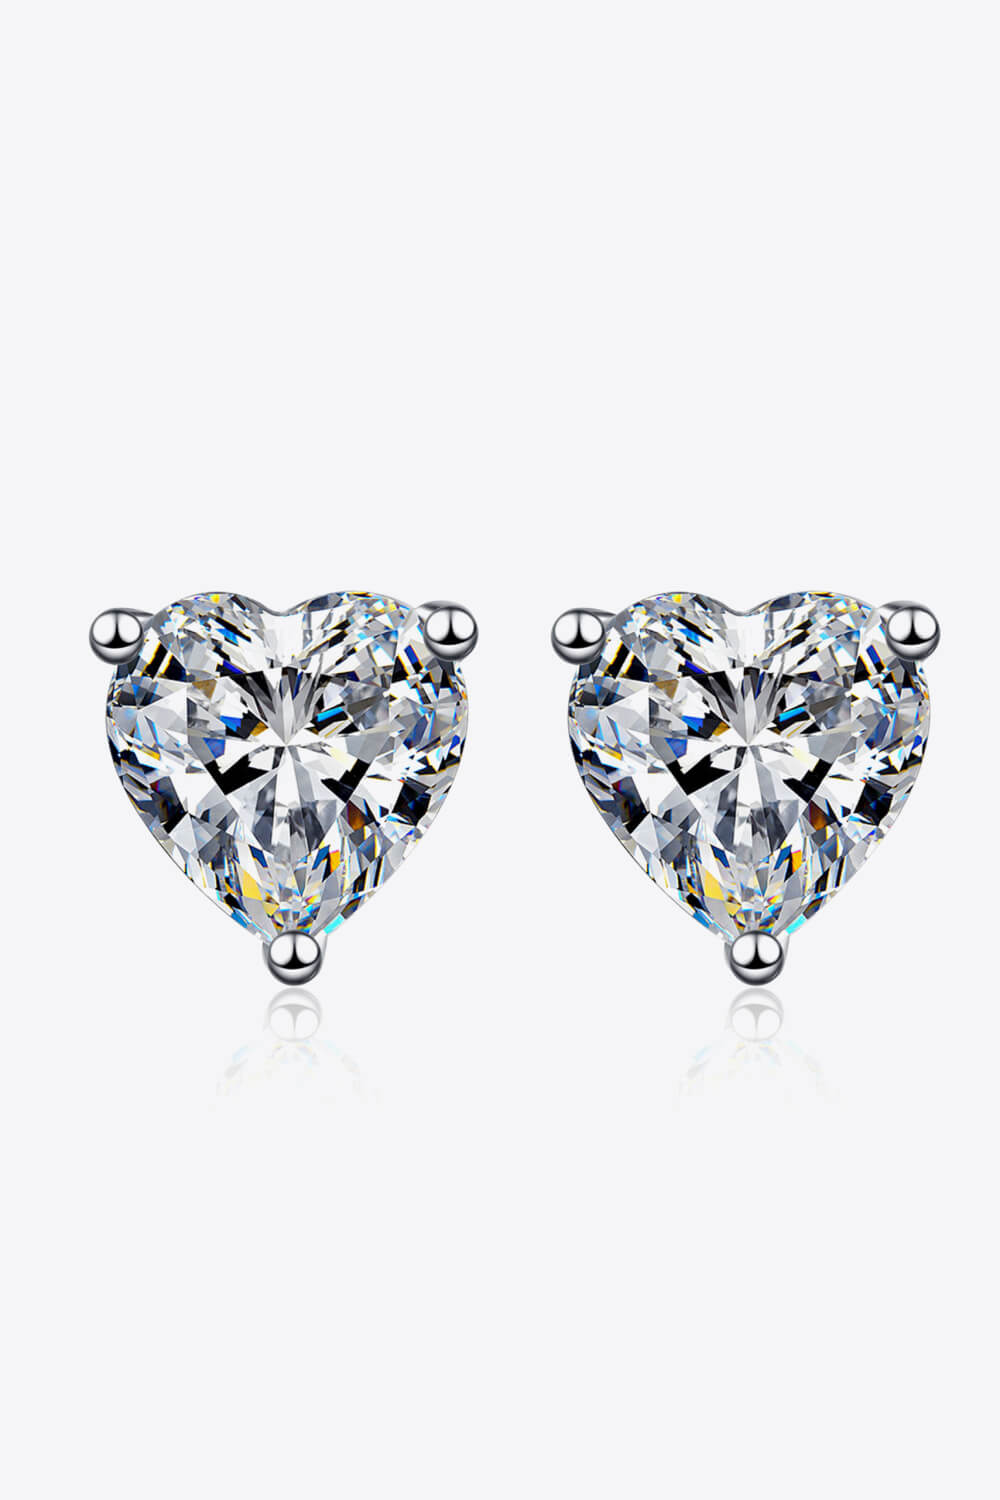 Hearts Desire Stud Earrings by Metopia Designs